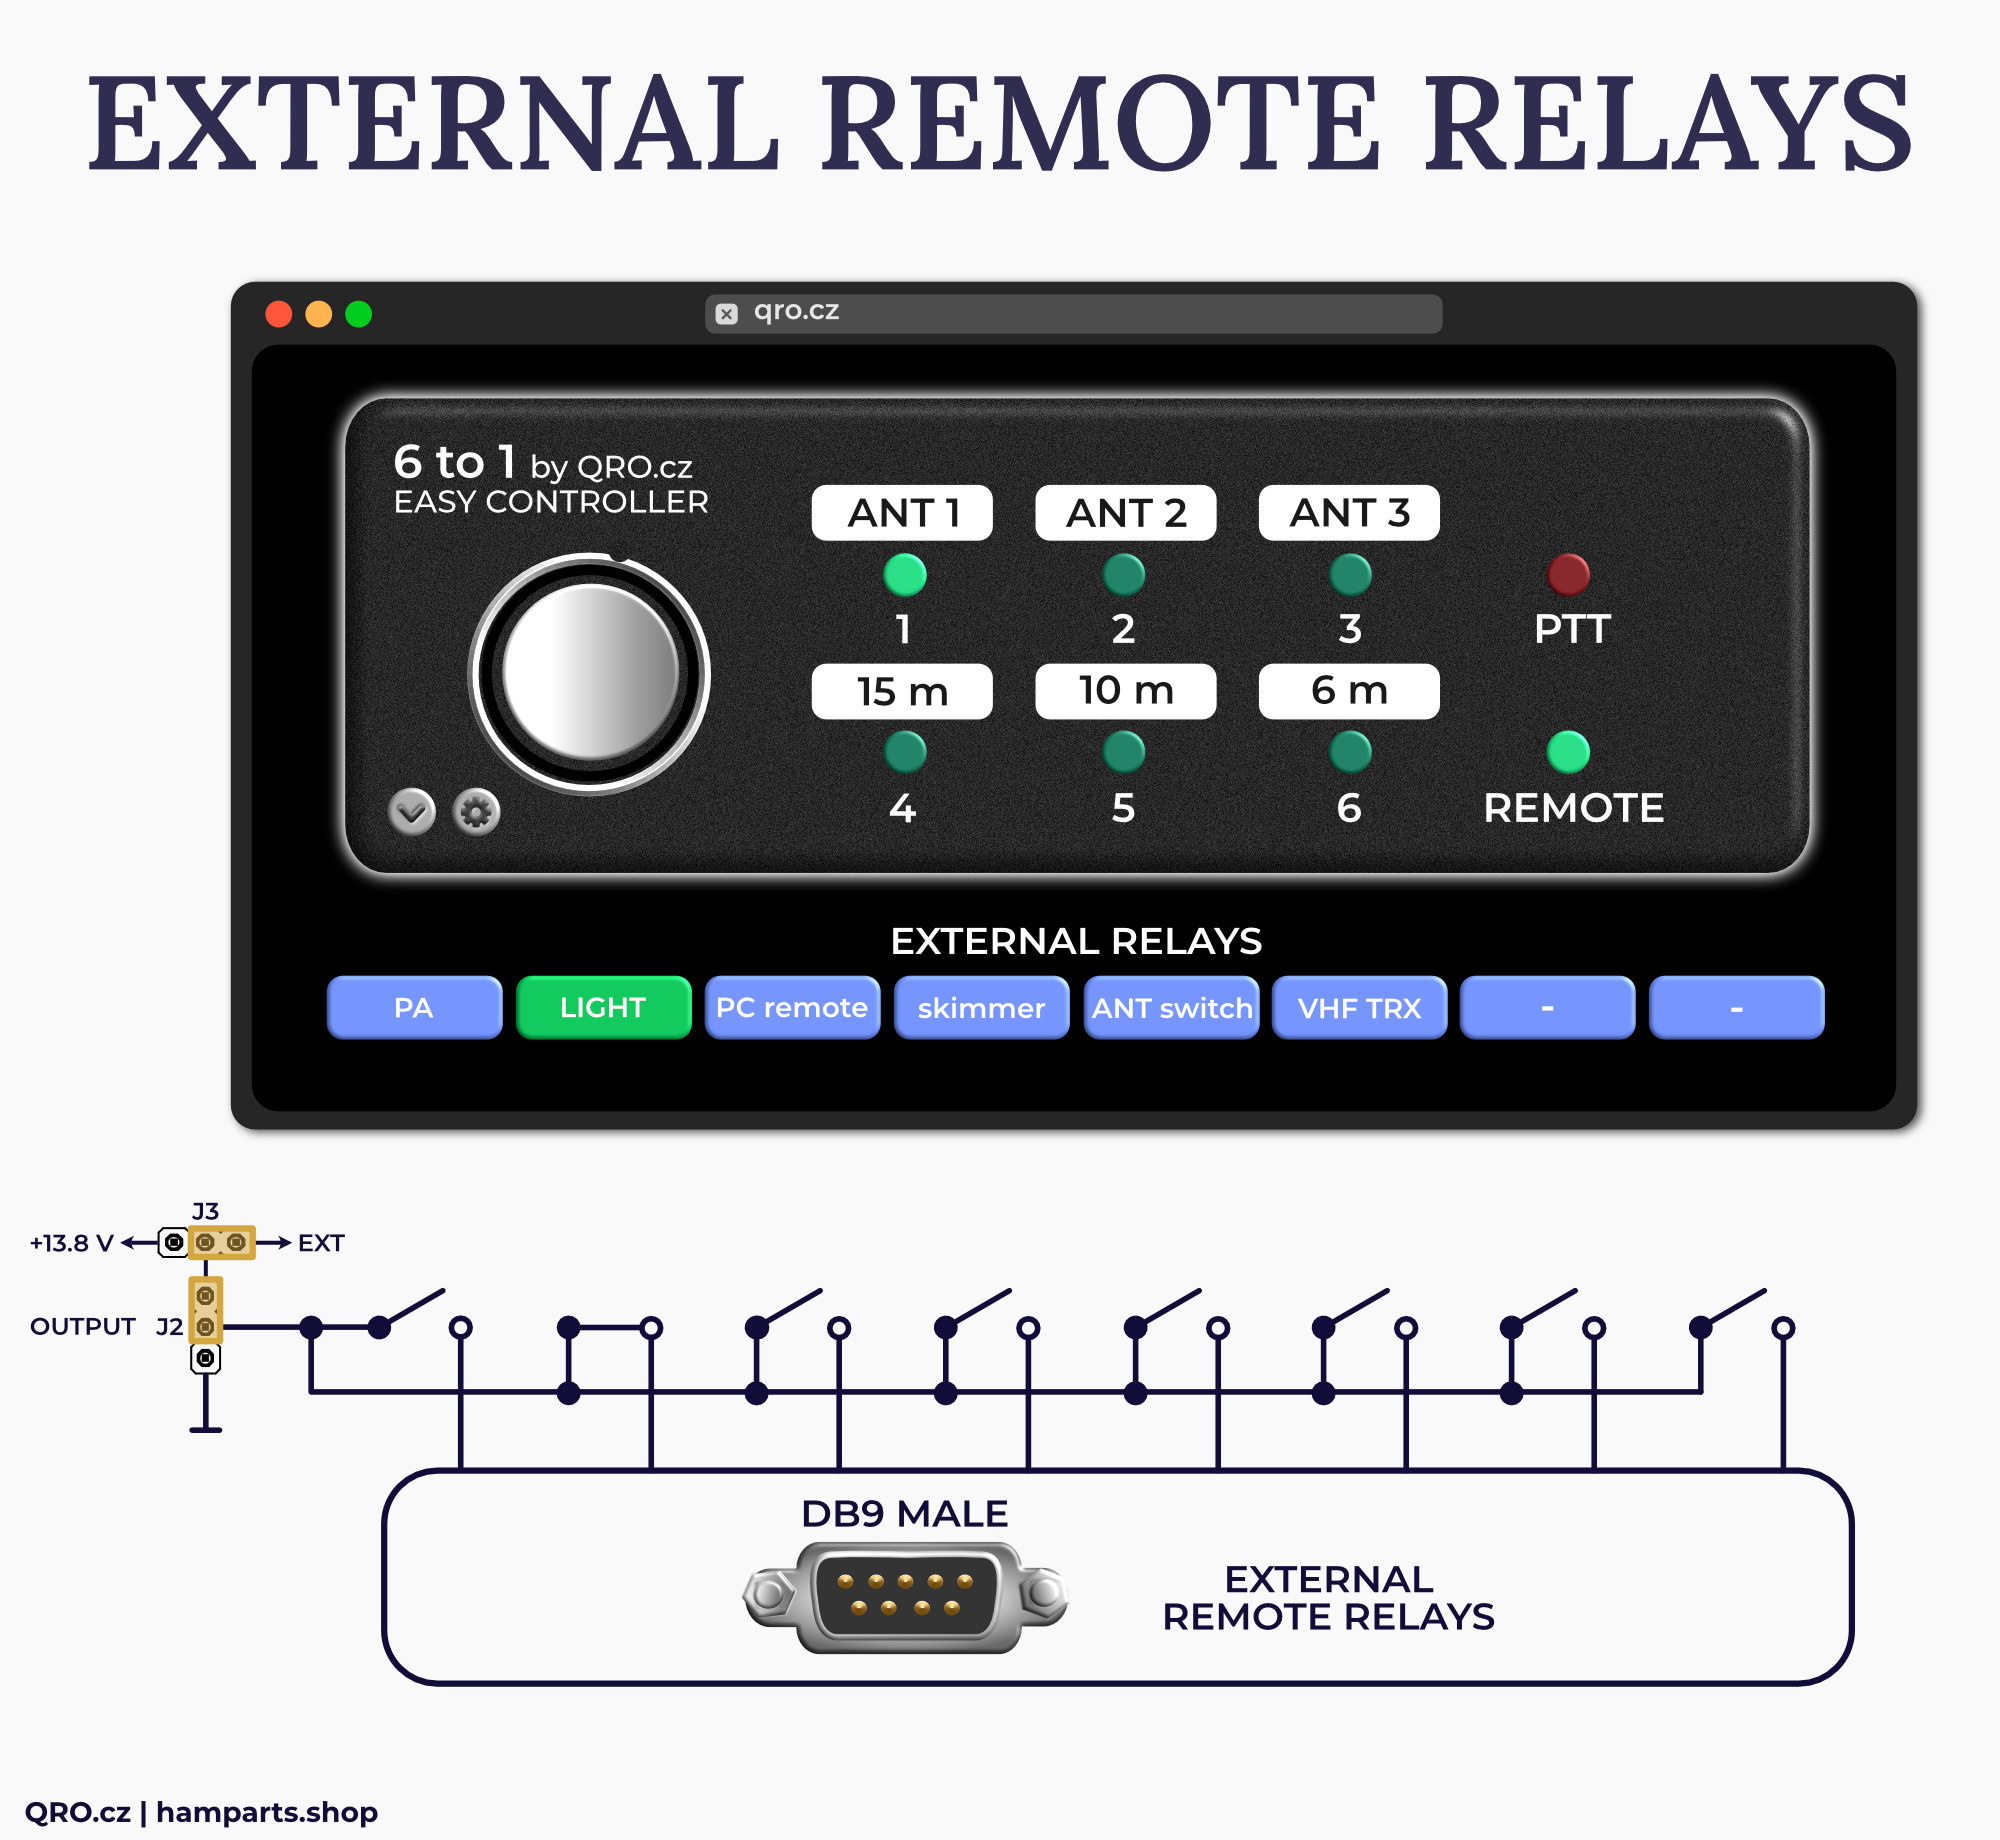 easy controller 6-1 external remote relays qro.cz hamparts.shop